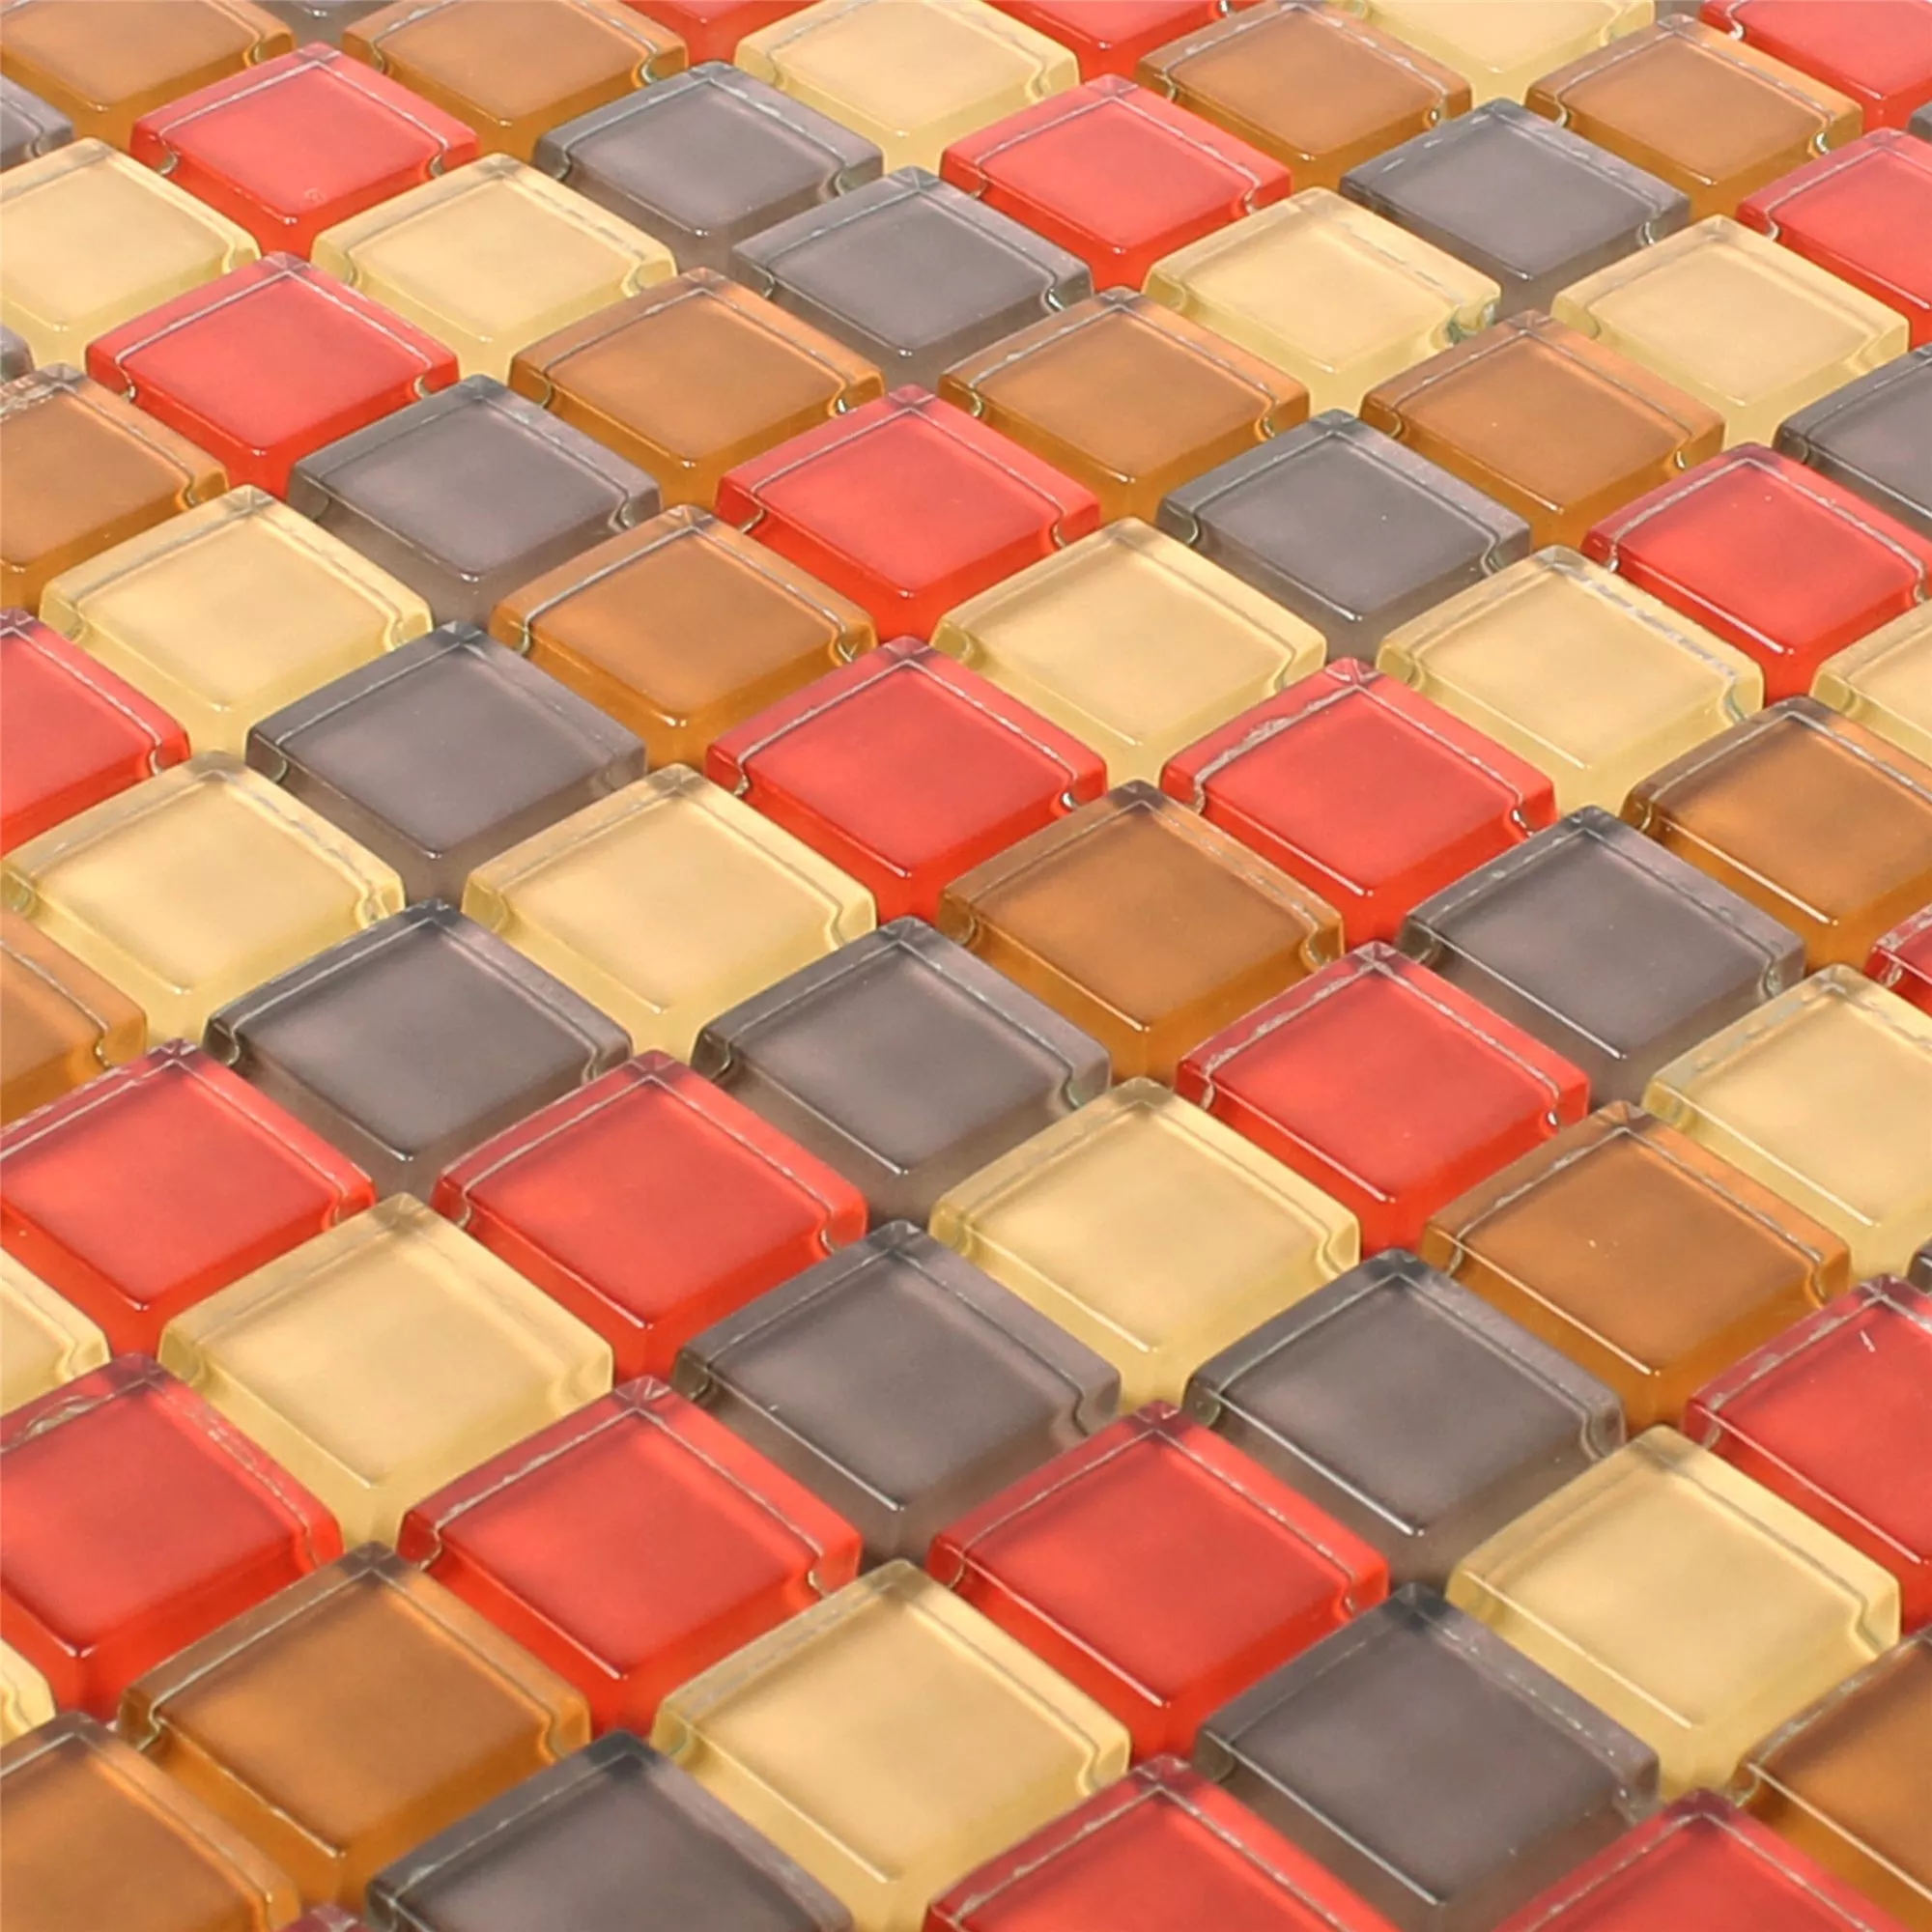 Mosaic Tiles Glass 23x23x8mm Red Mix